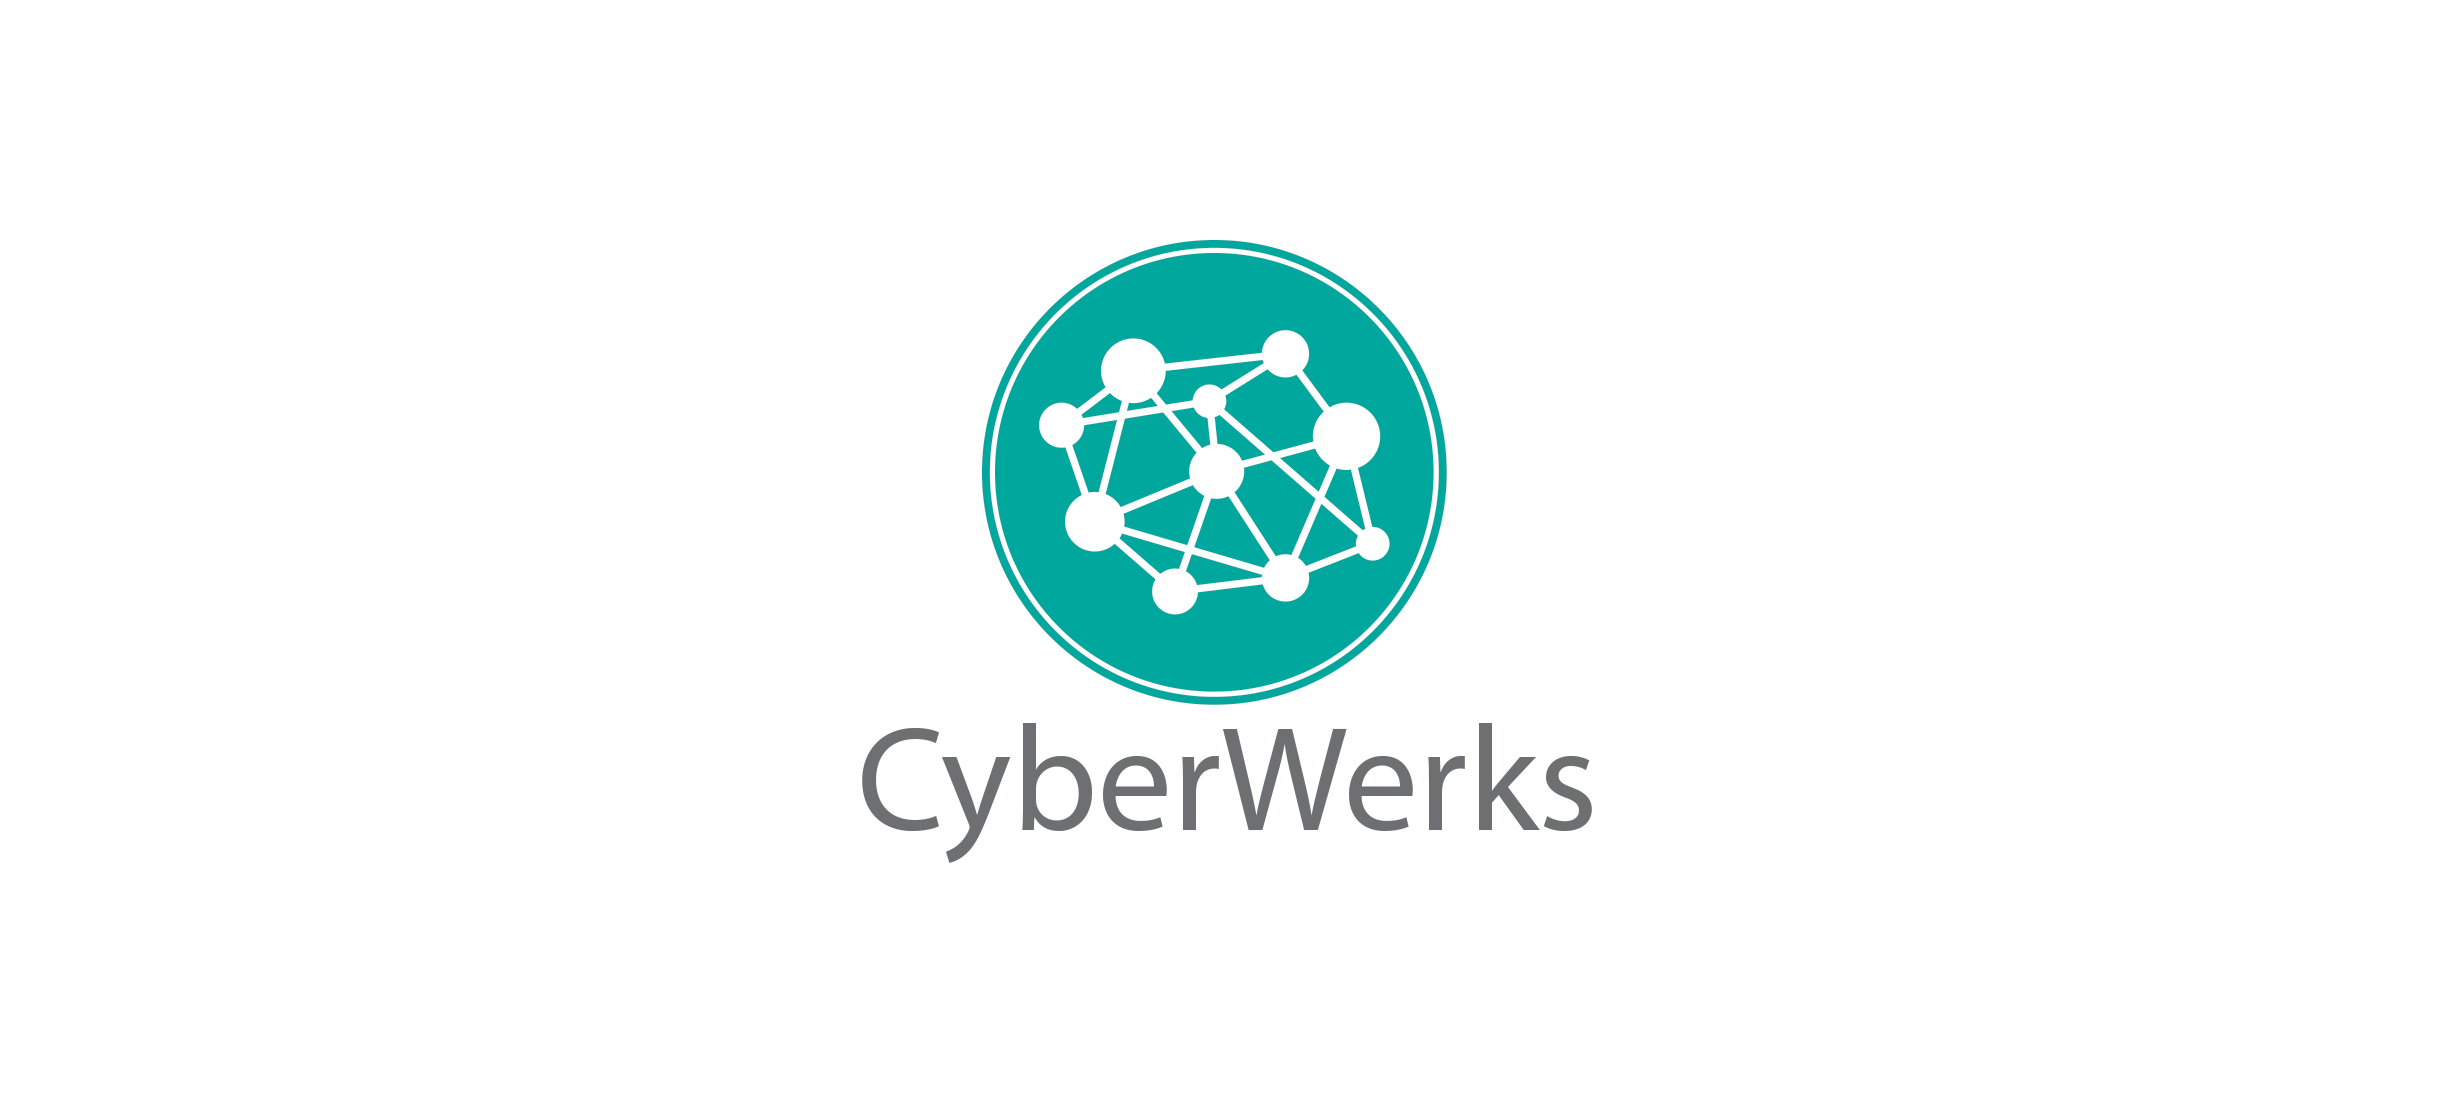 CyberWerks